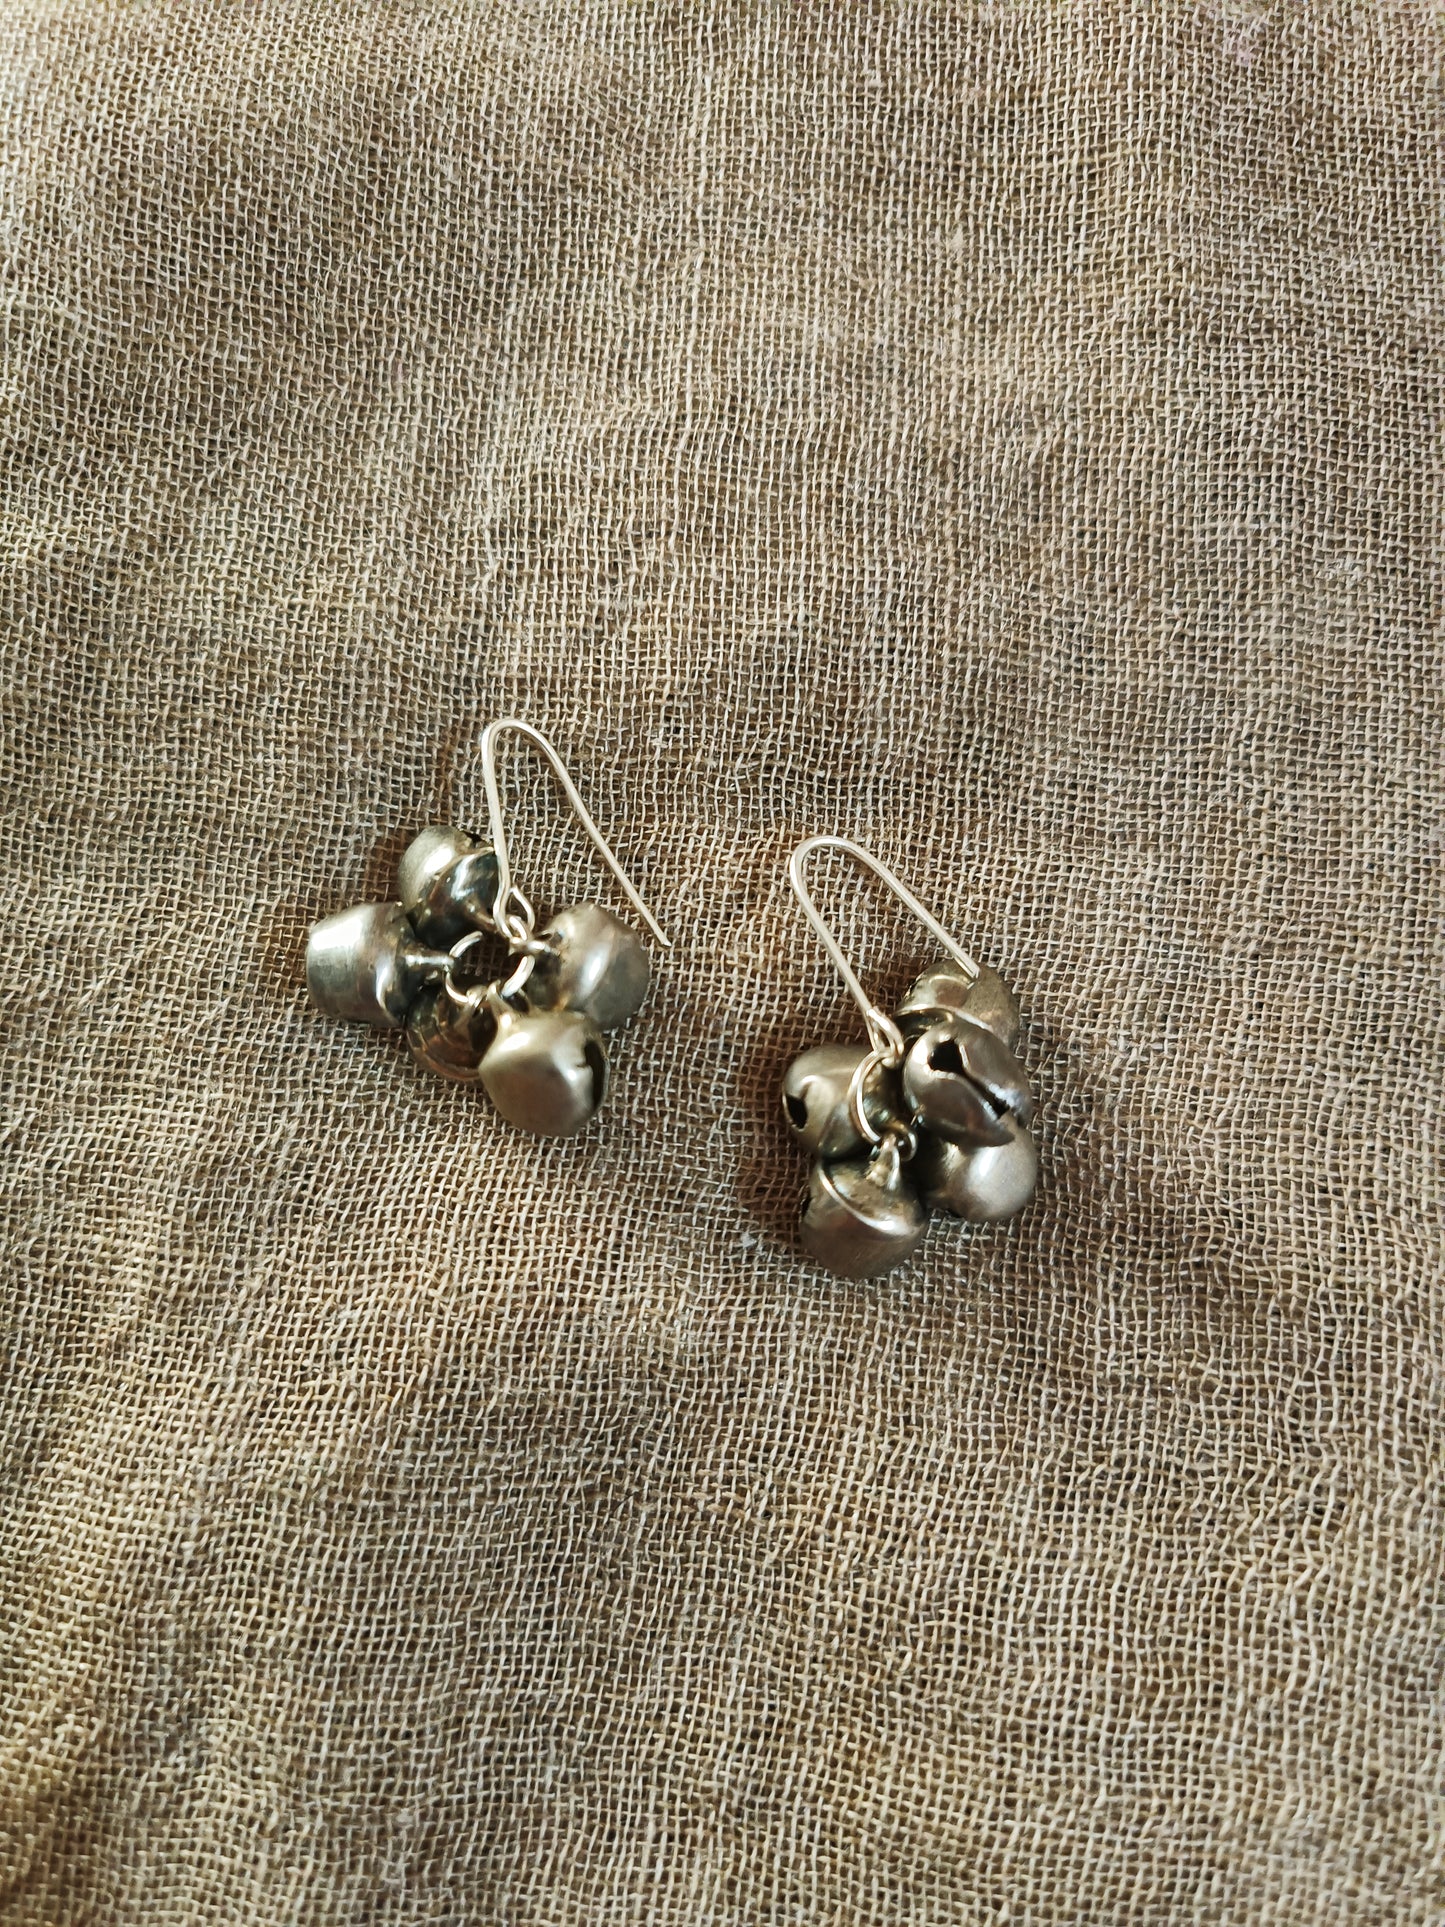 Small Hanging Earrings Feb